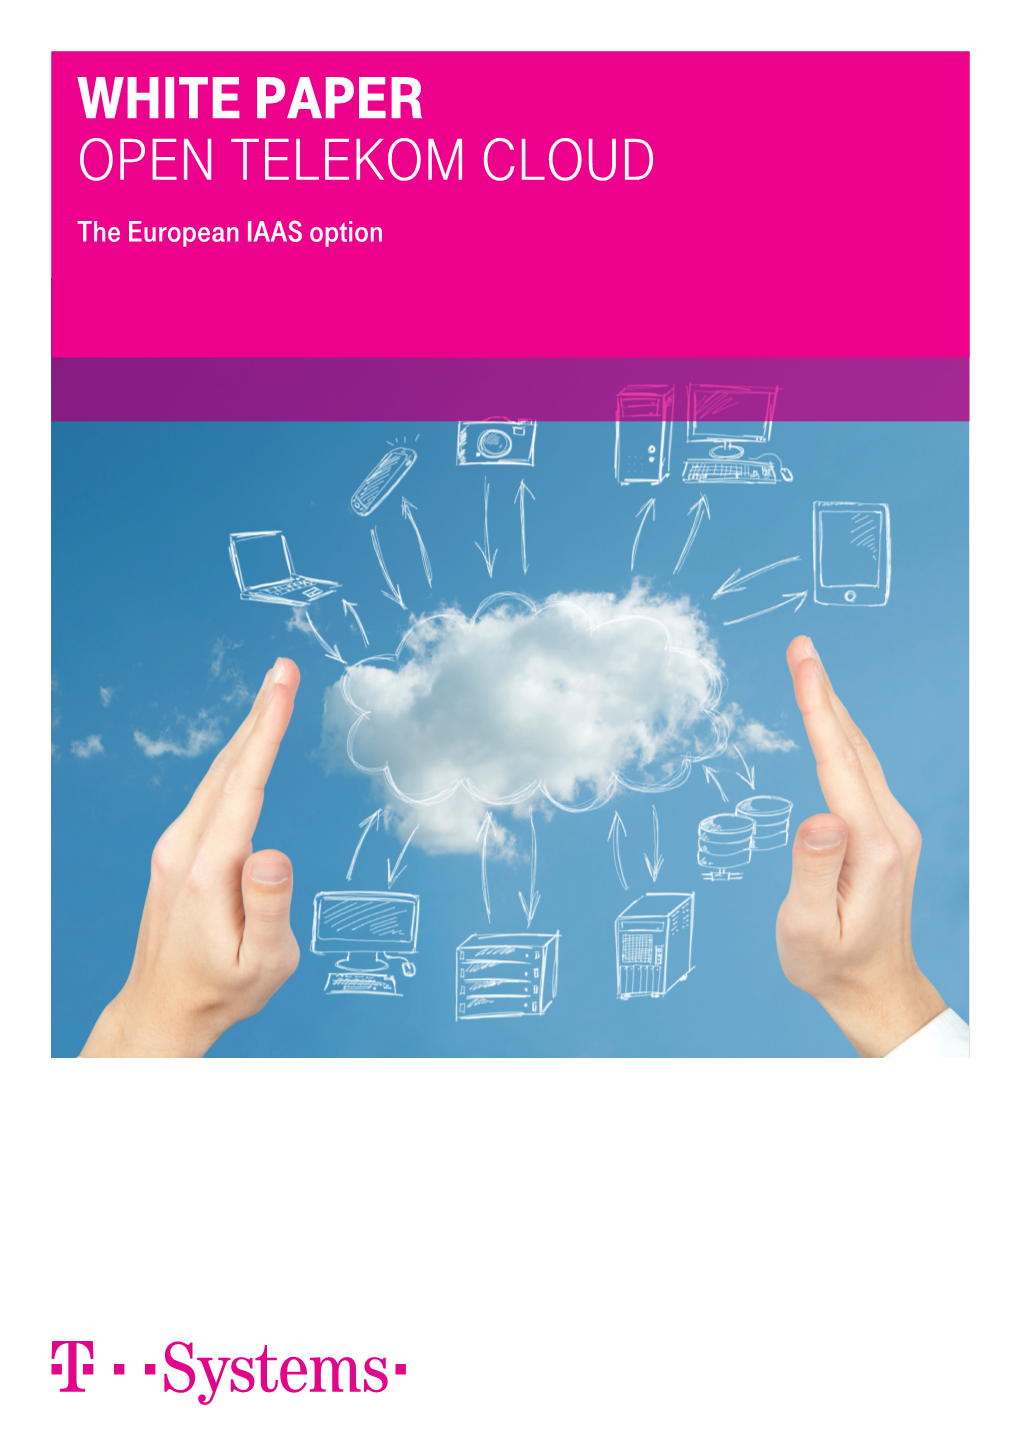 White Paper Open Telekom Cloud the European IAAS Option White Paper Open Telekom Cloud Contents